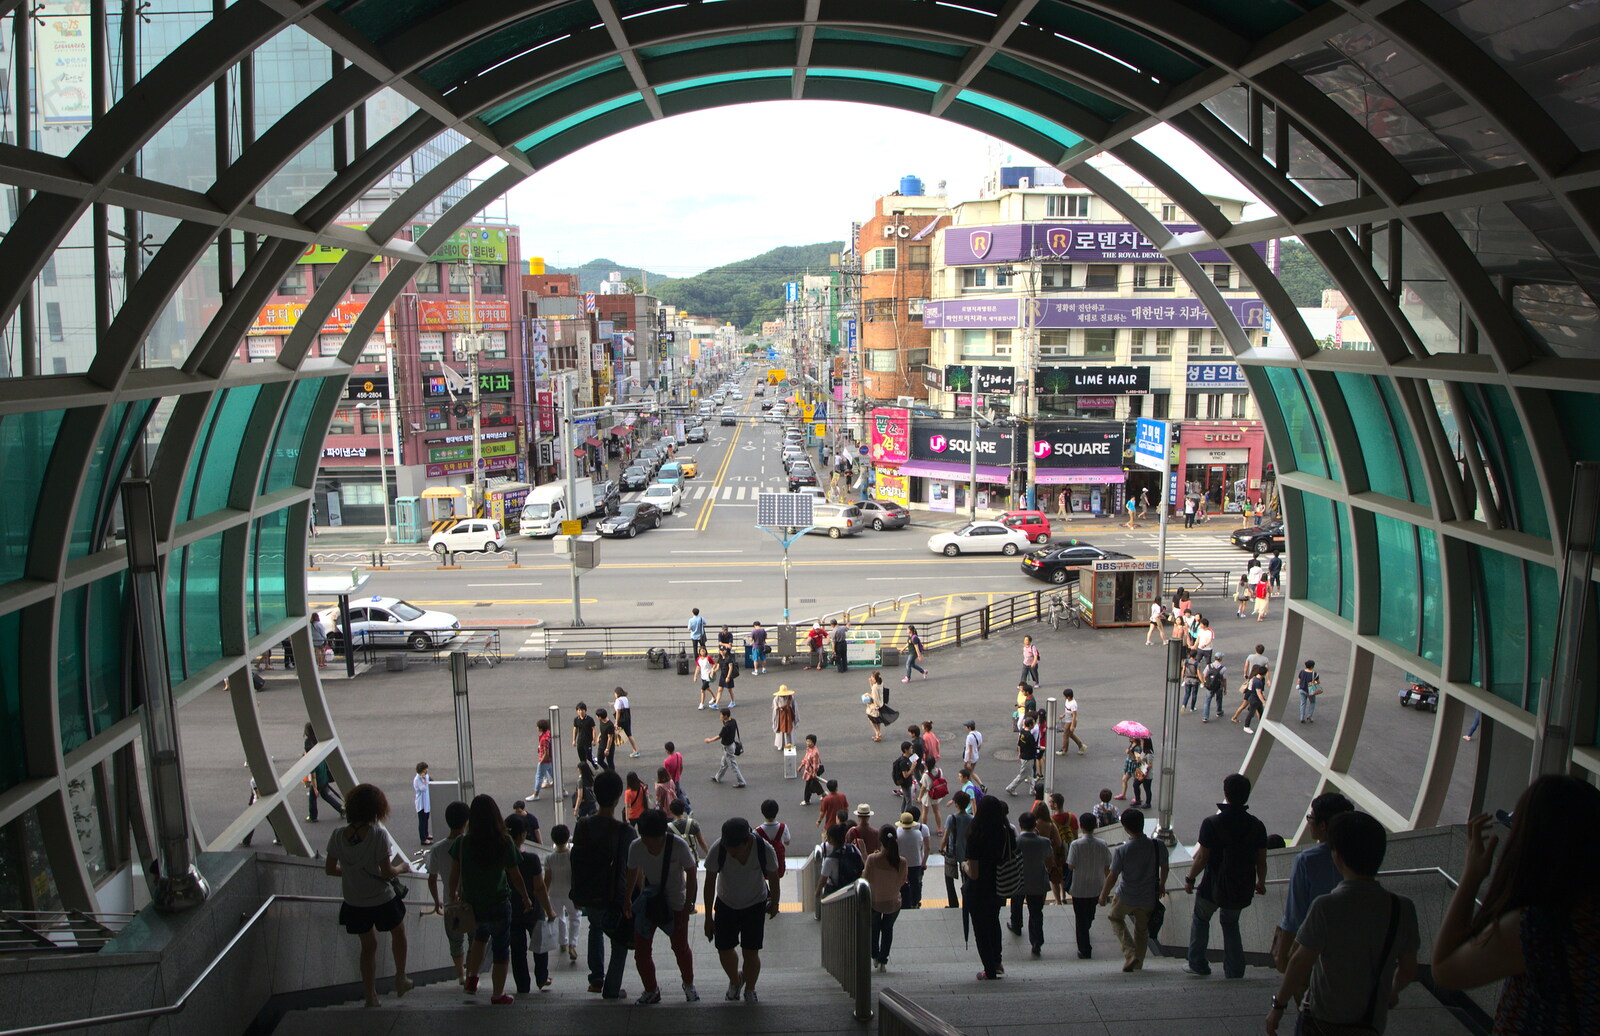 The tunnel-like entrance to Gumi station from Seomun Market, Daegu, South Korea - 1st July 2012